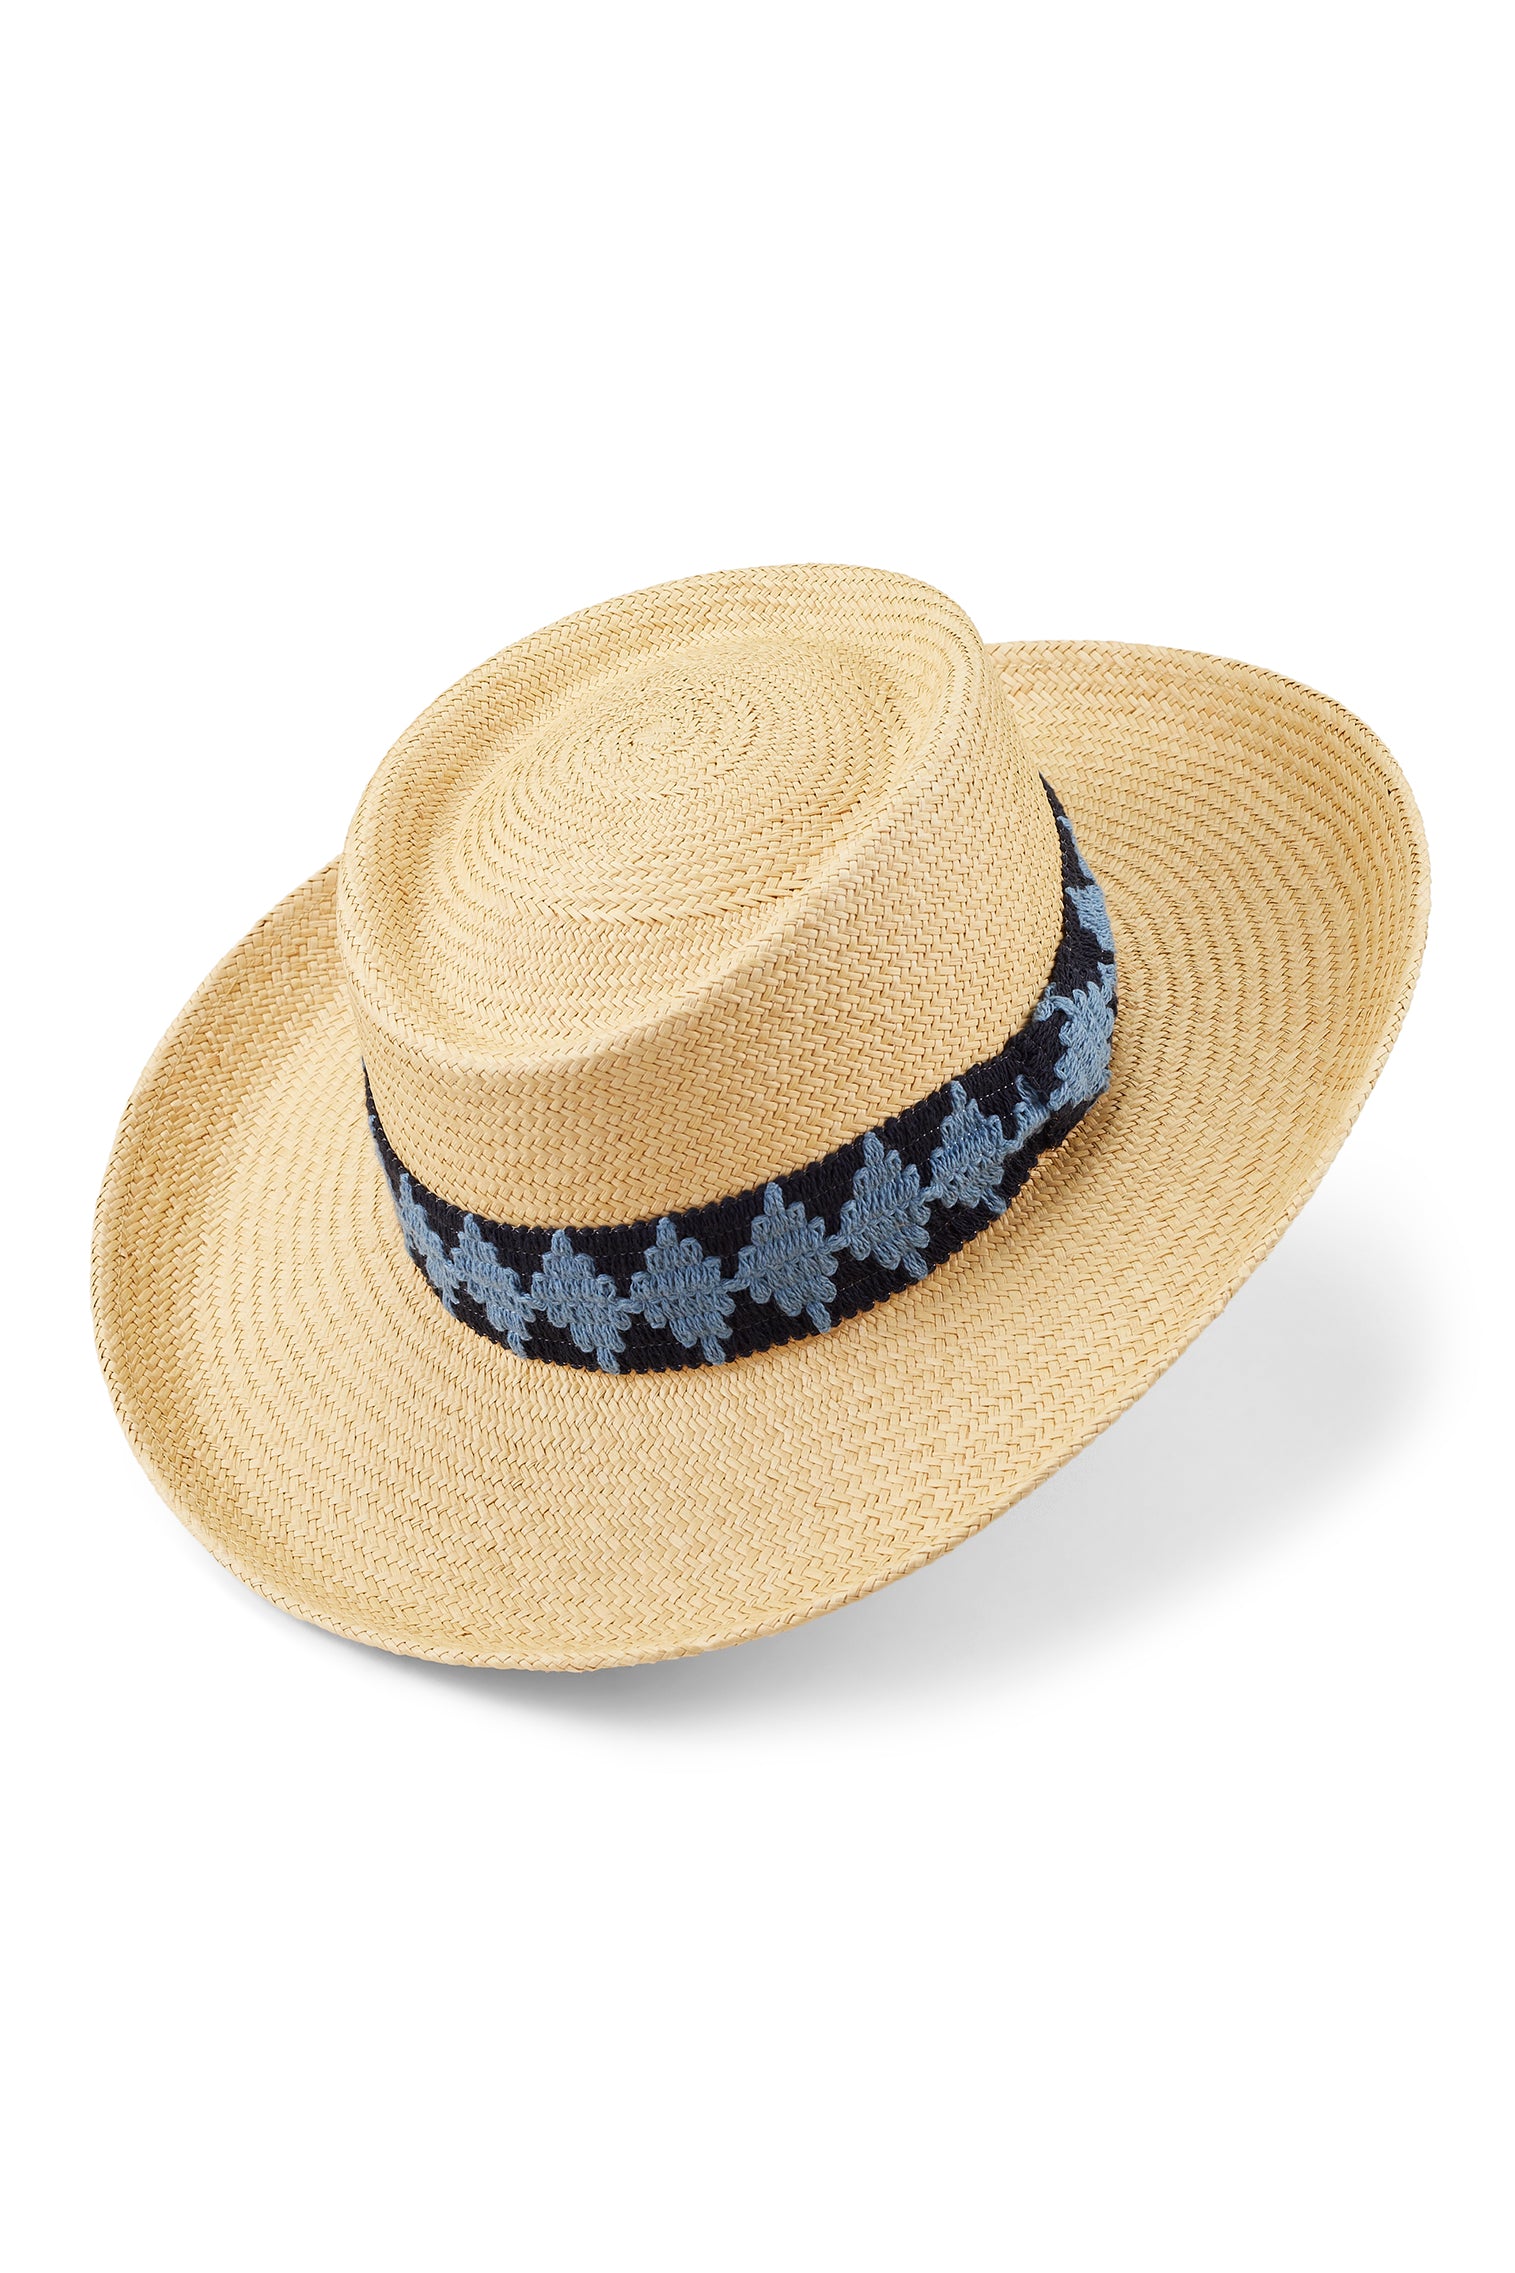 Mens Straw Fedora Beach Summer Travel Hat Large Sizes 59, 60, 61, 62, 63,  64cm